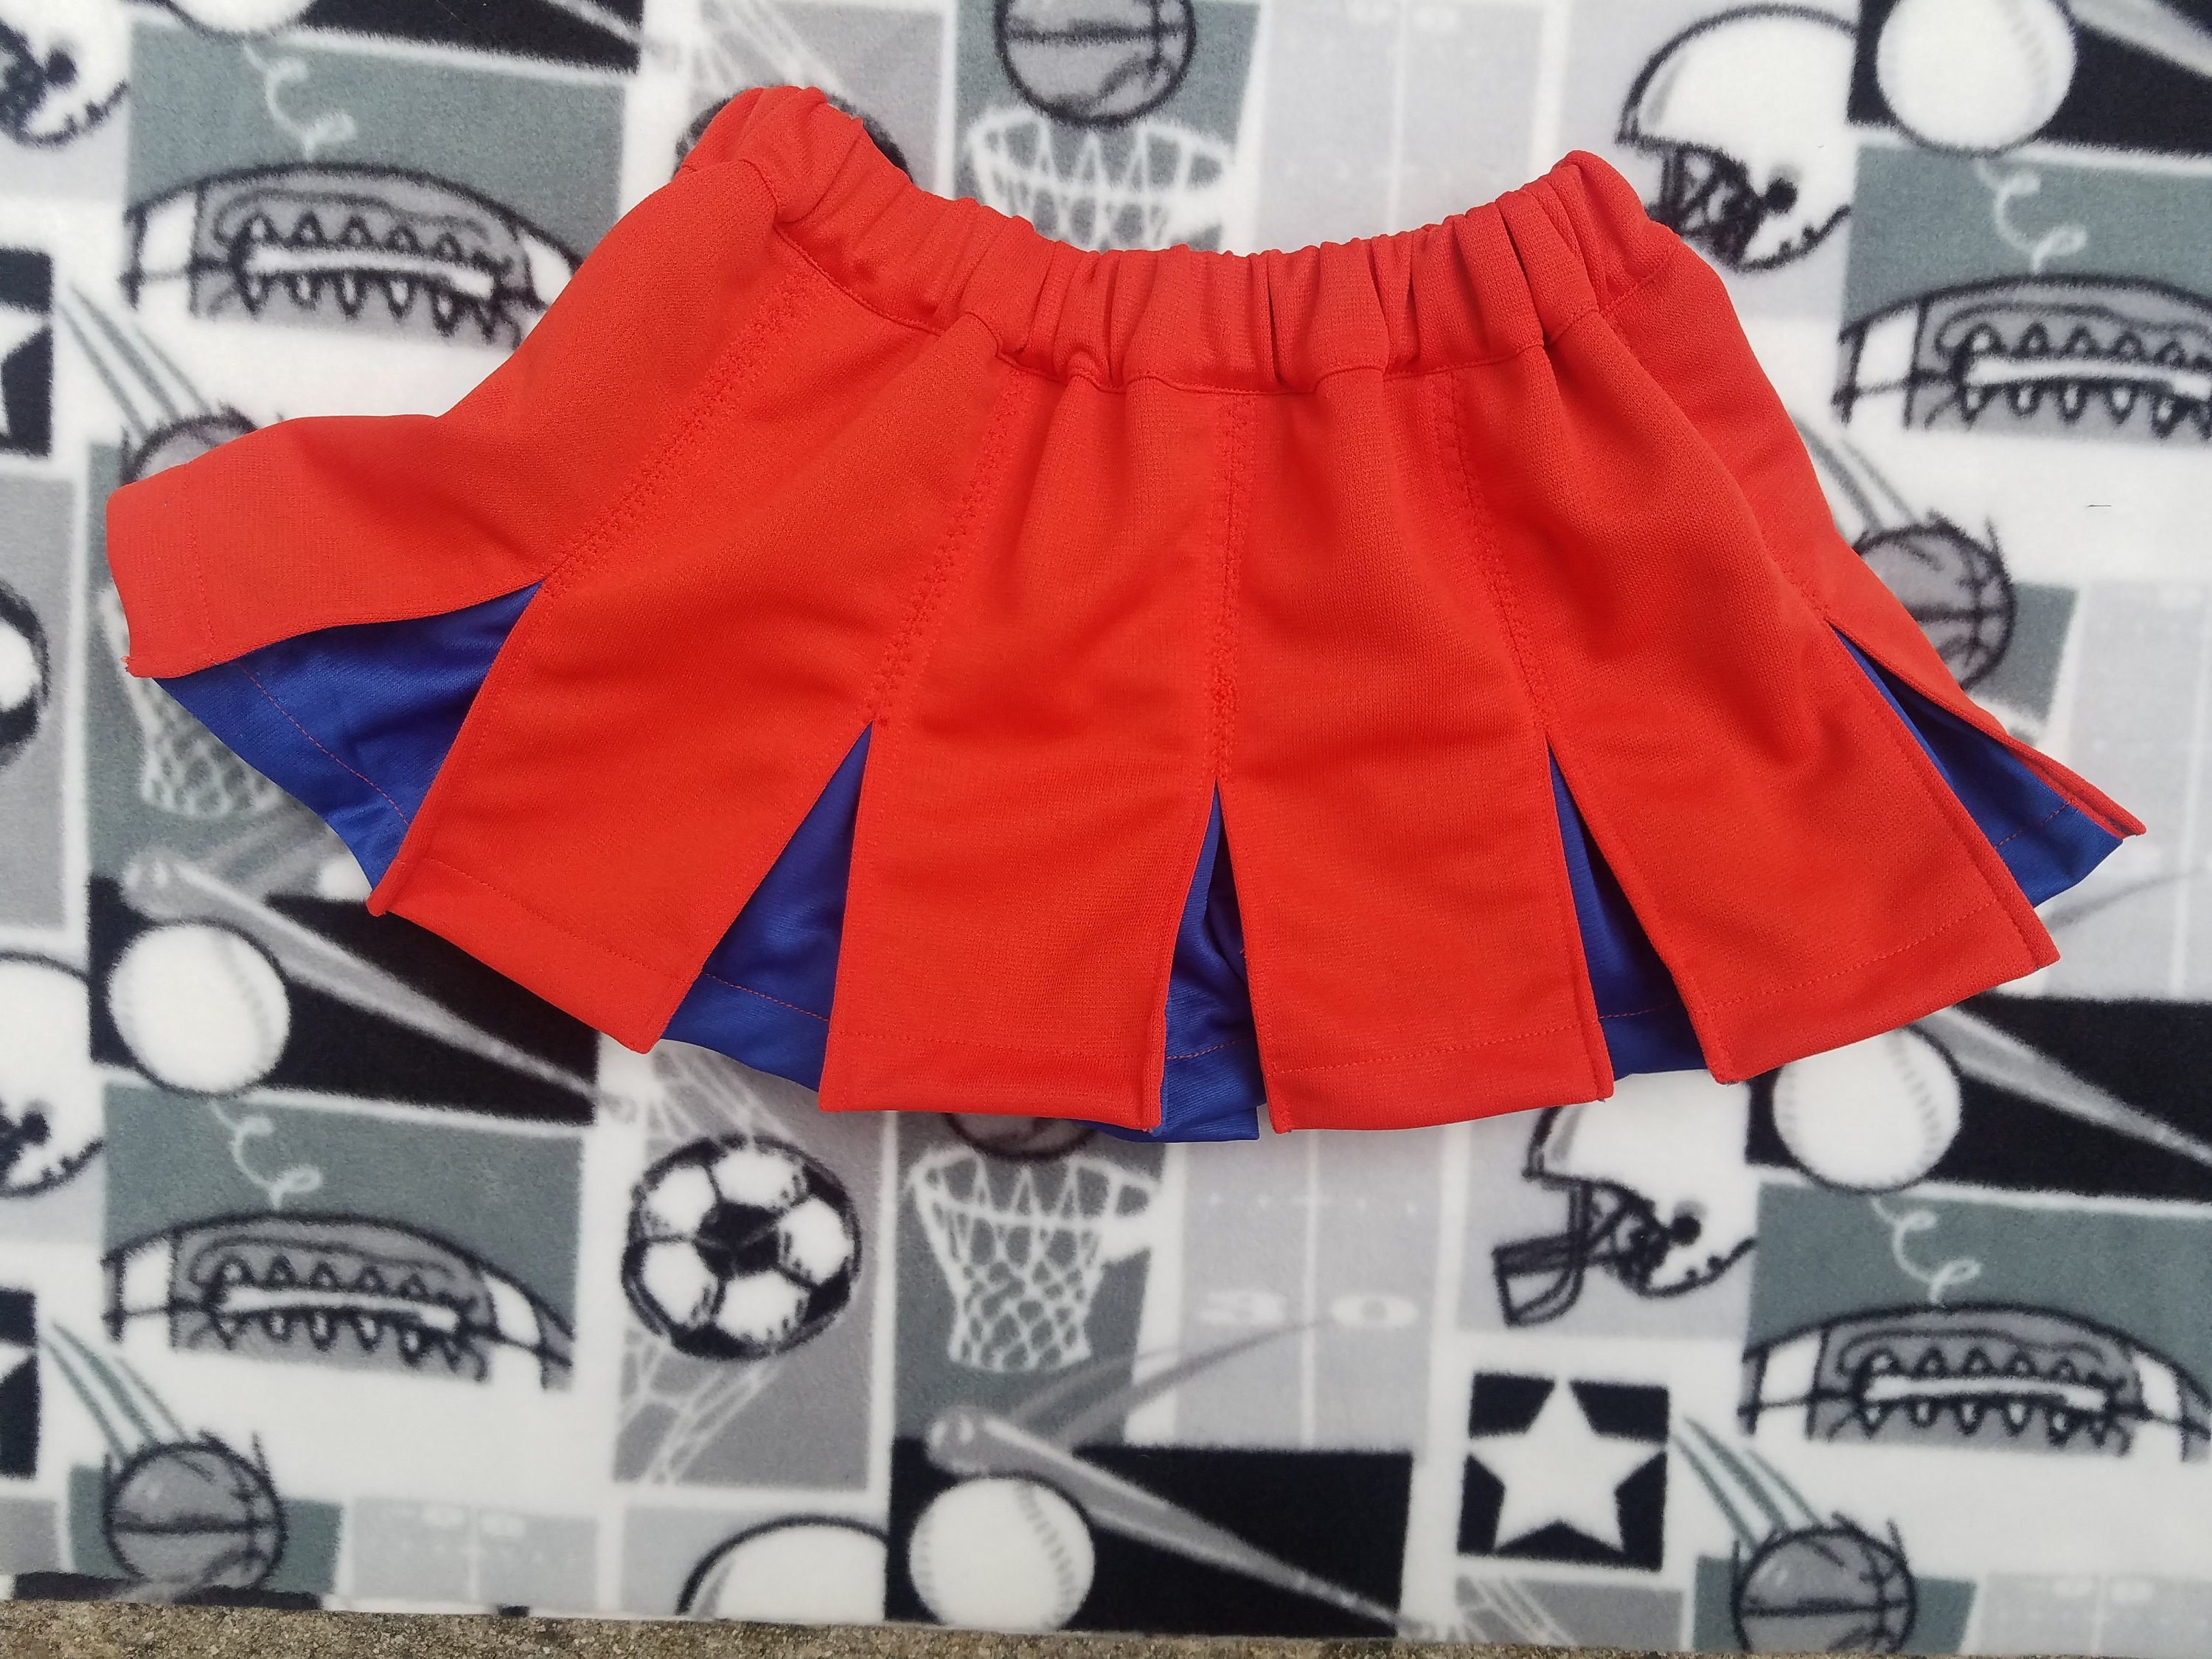 5T specify size in "notes" section sizes 6 months Kleding Meisjeskleding Rokken two colors Baby/Toddler Cheerleader Kick Pleat Skirt 